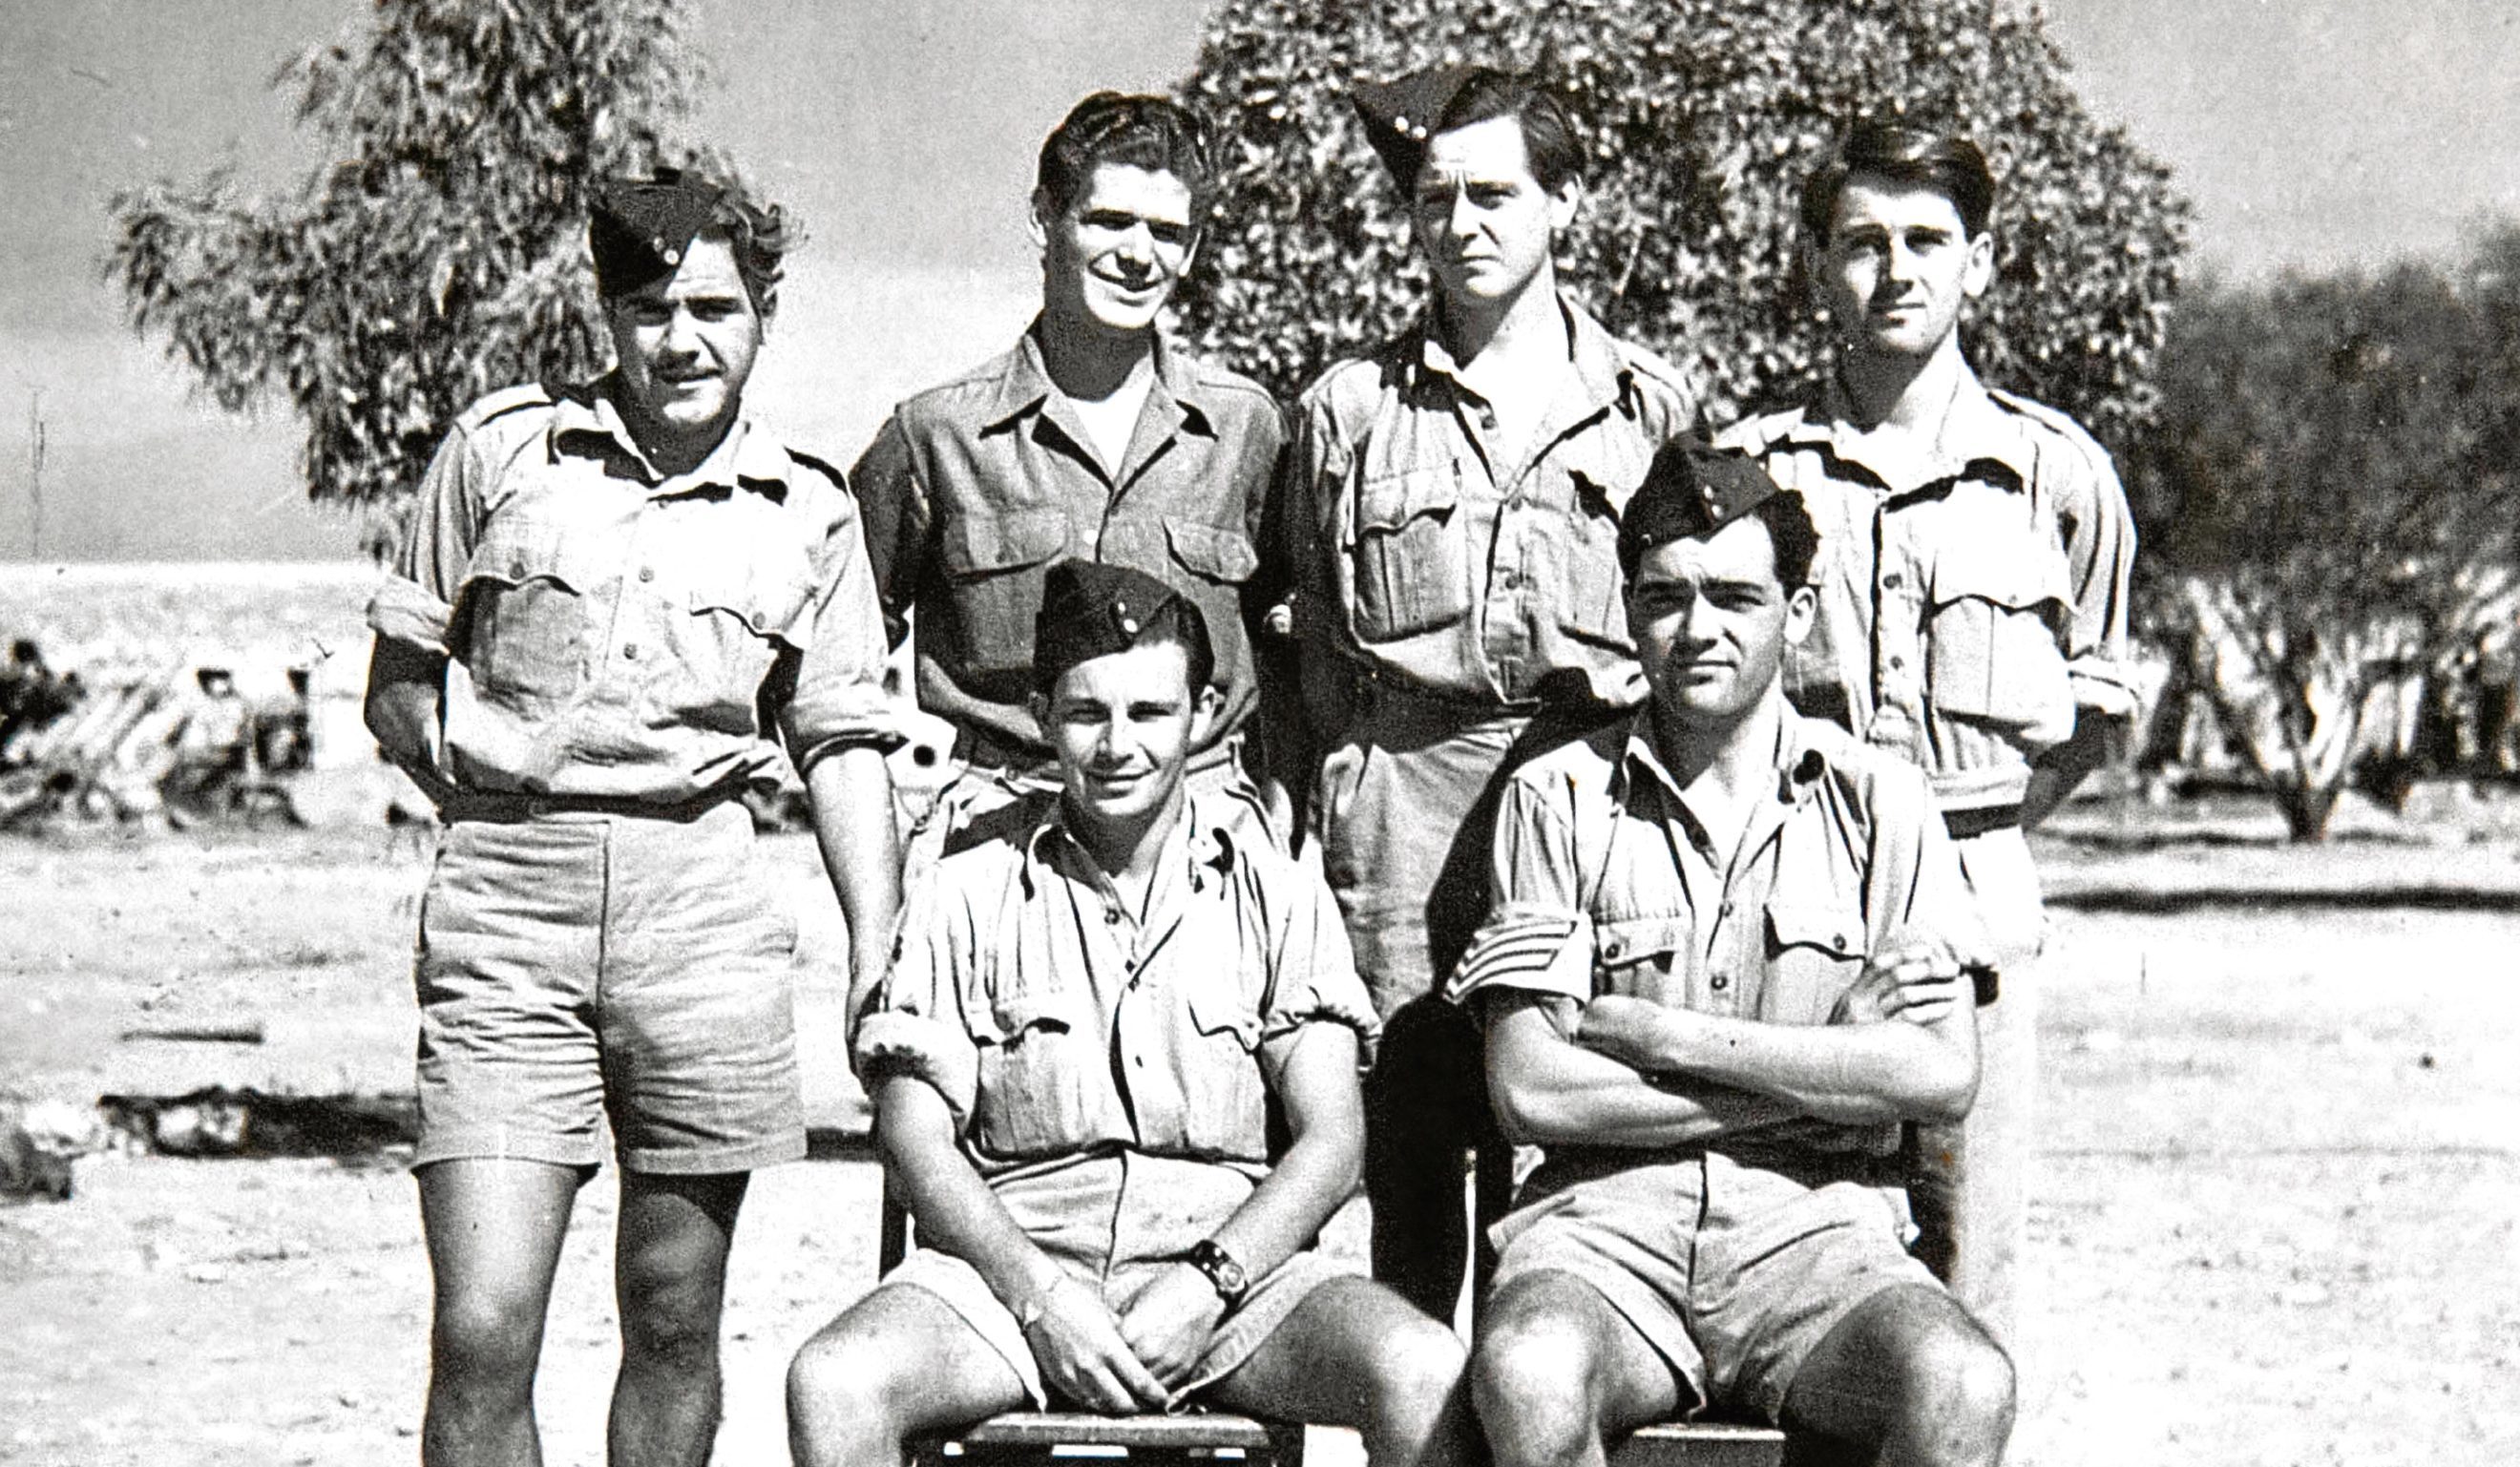 Reader Jane's uncle John (far left) and sole survivor Jim (right)